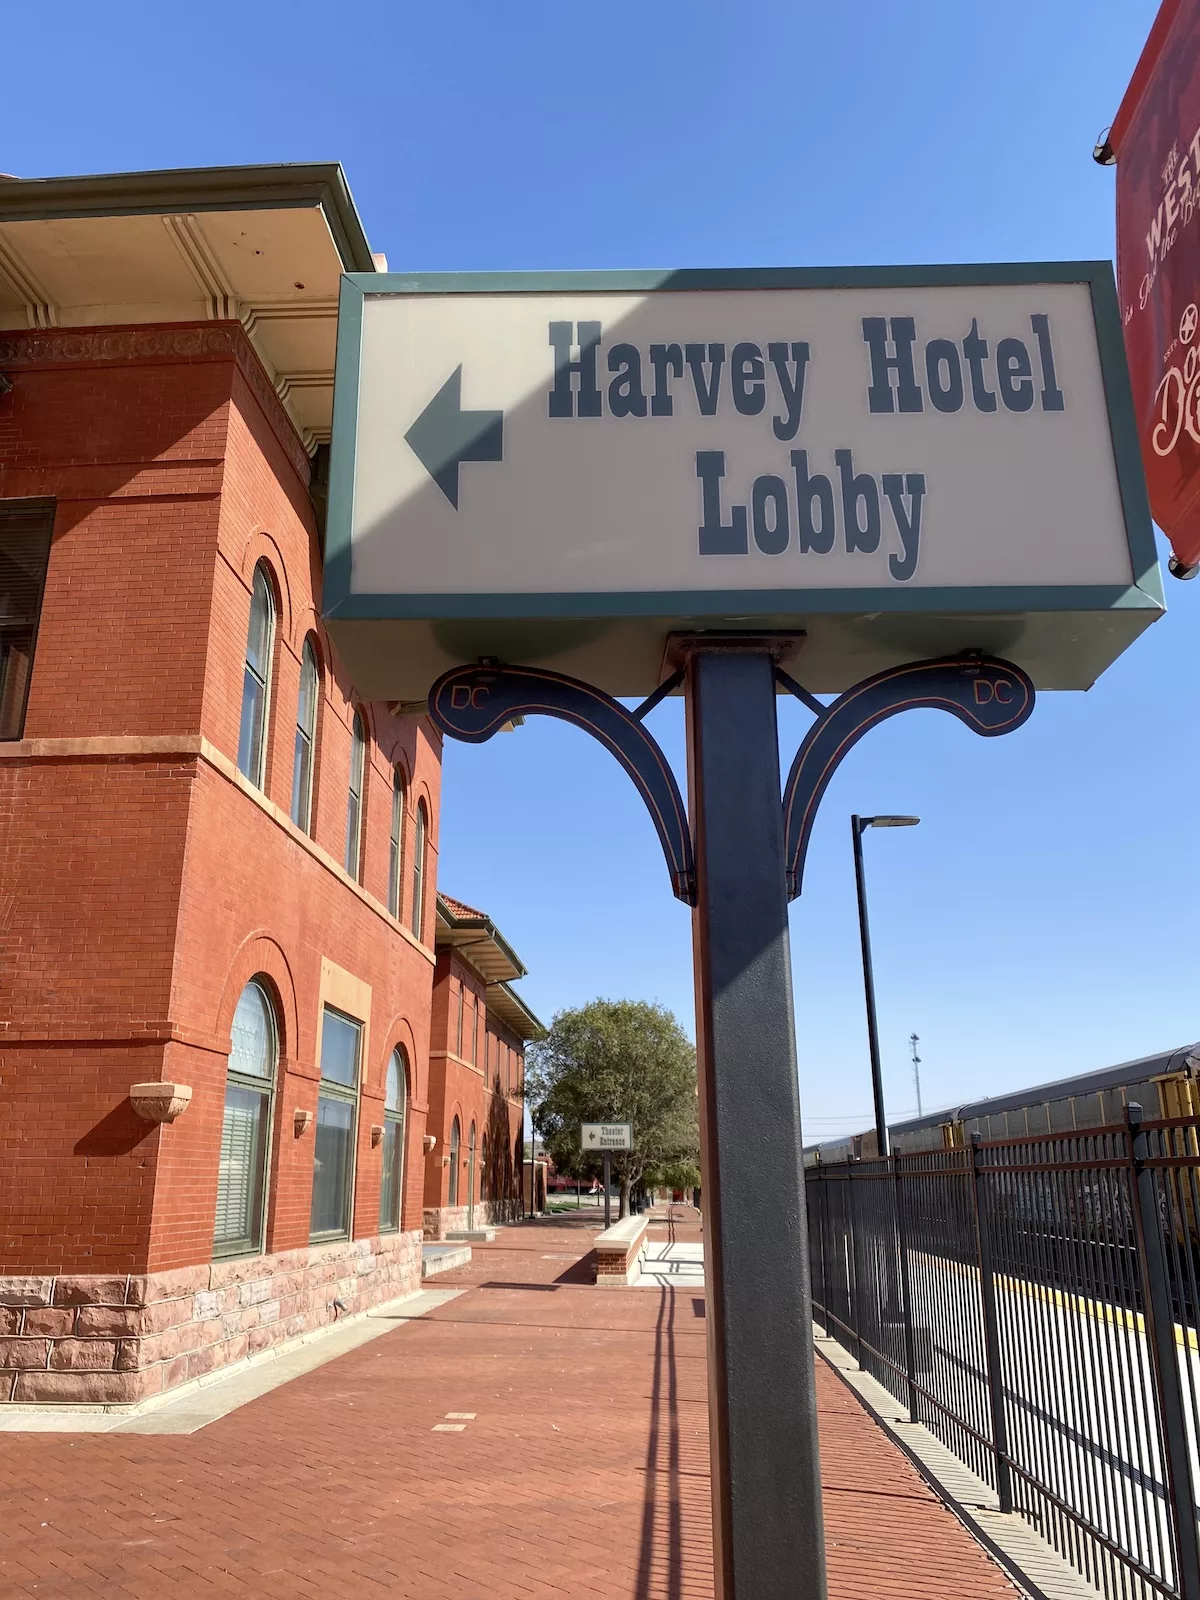 Harvey Hotel Lobby sign outside of Historic Santa Fe Depot in Dodge City, Kansas